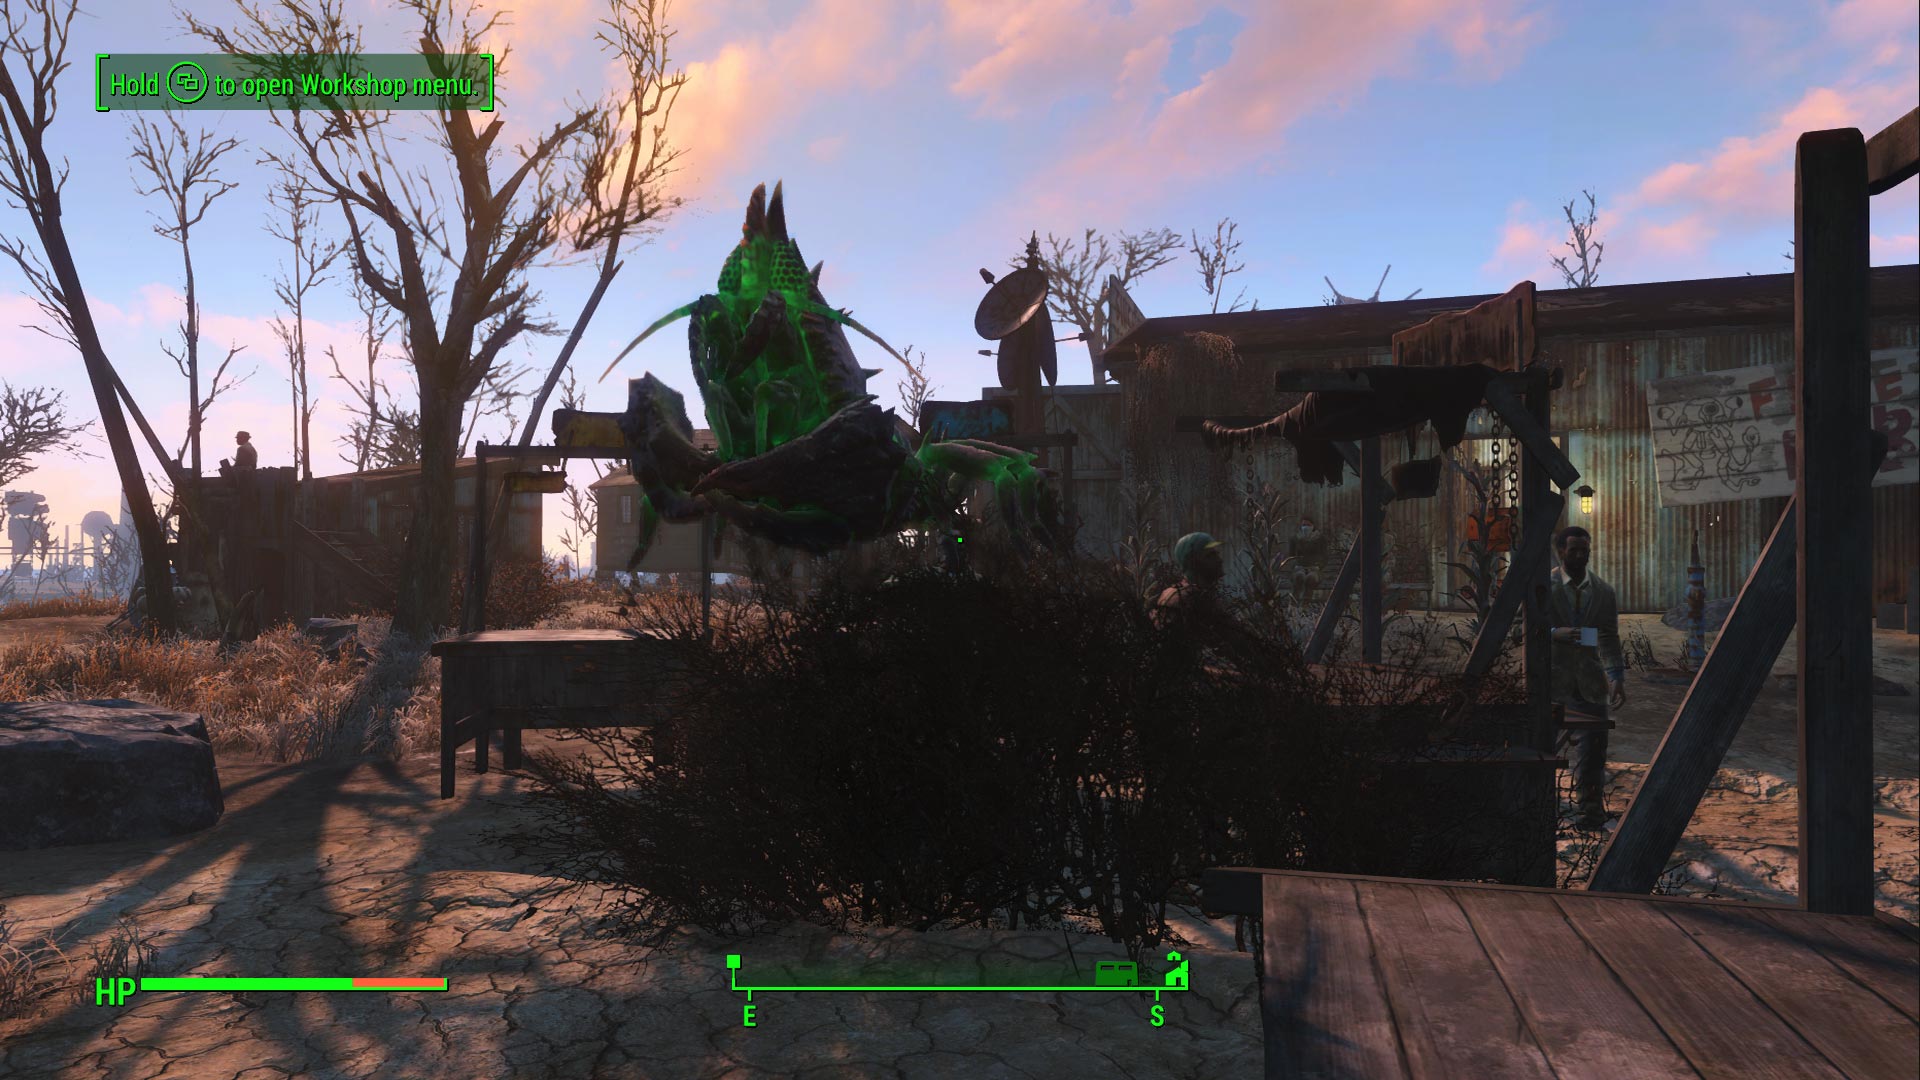 Fallout 4: Wasteland Workshop